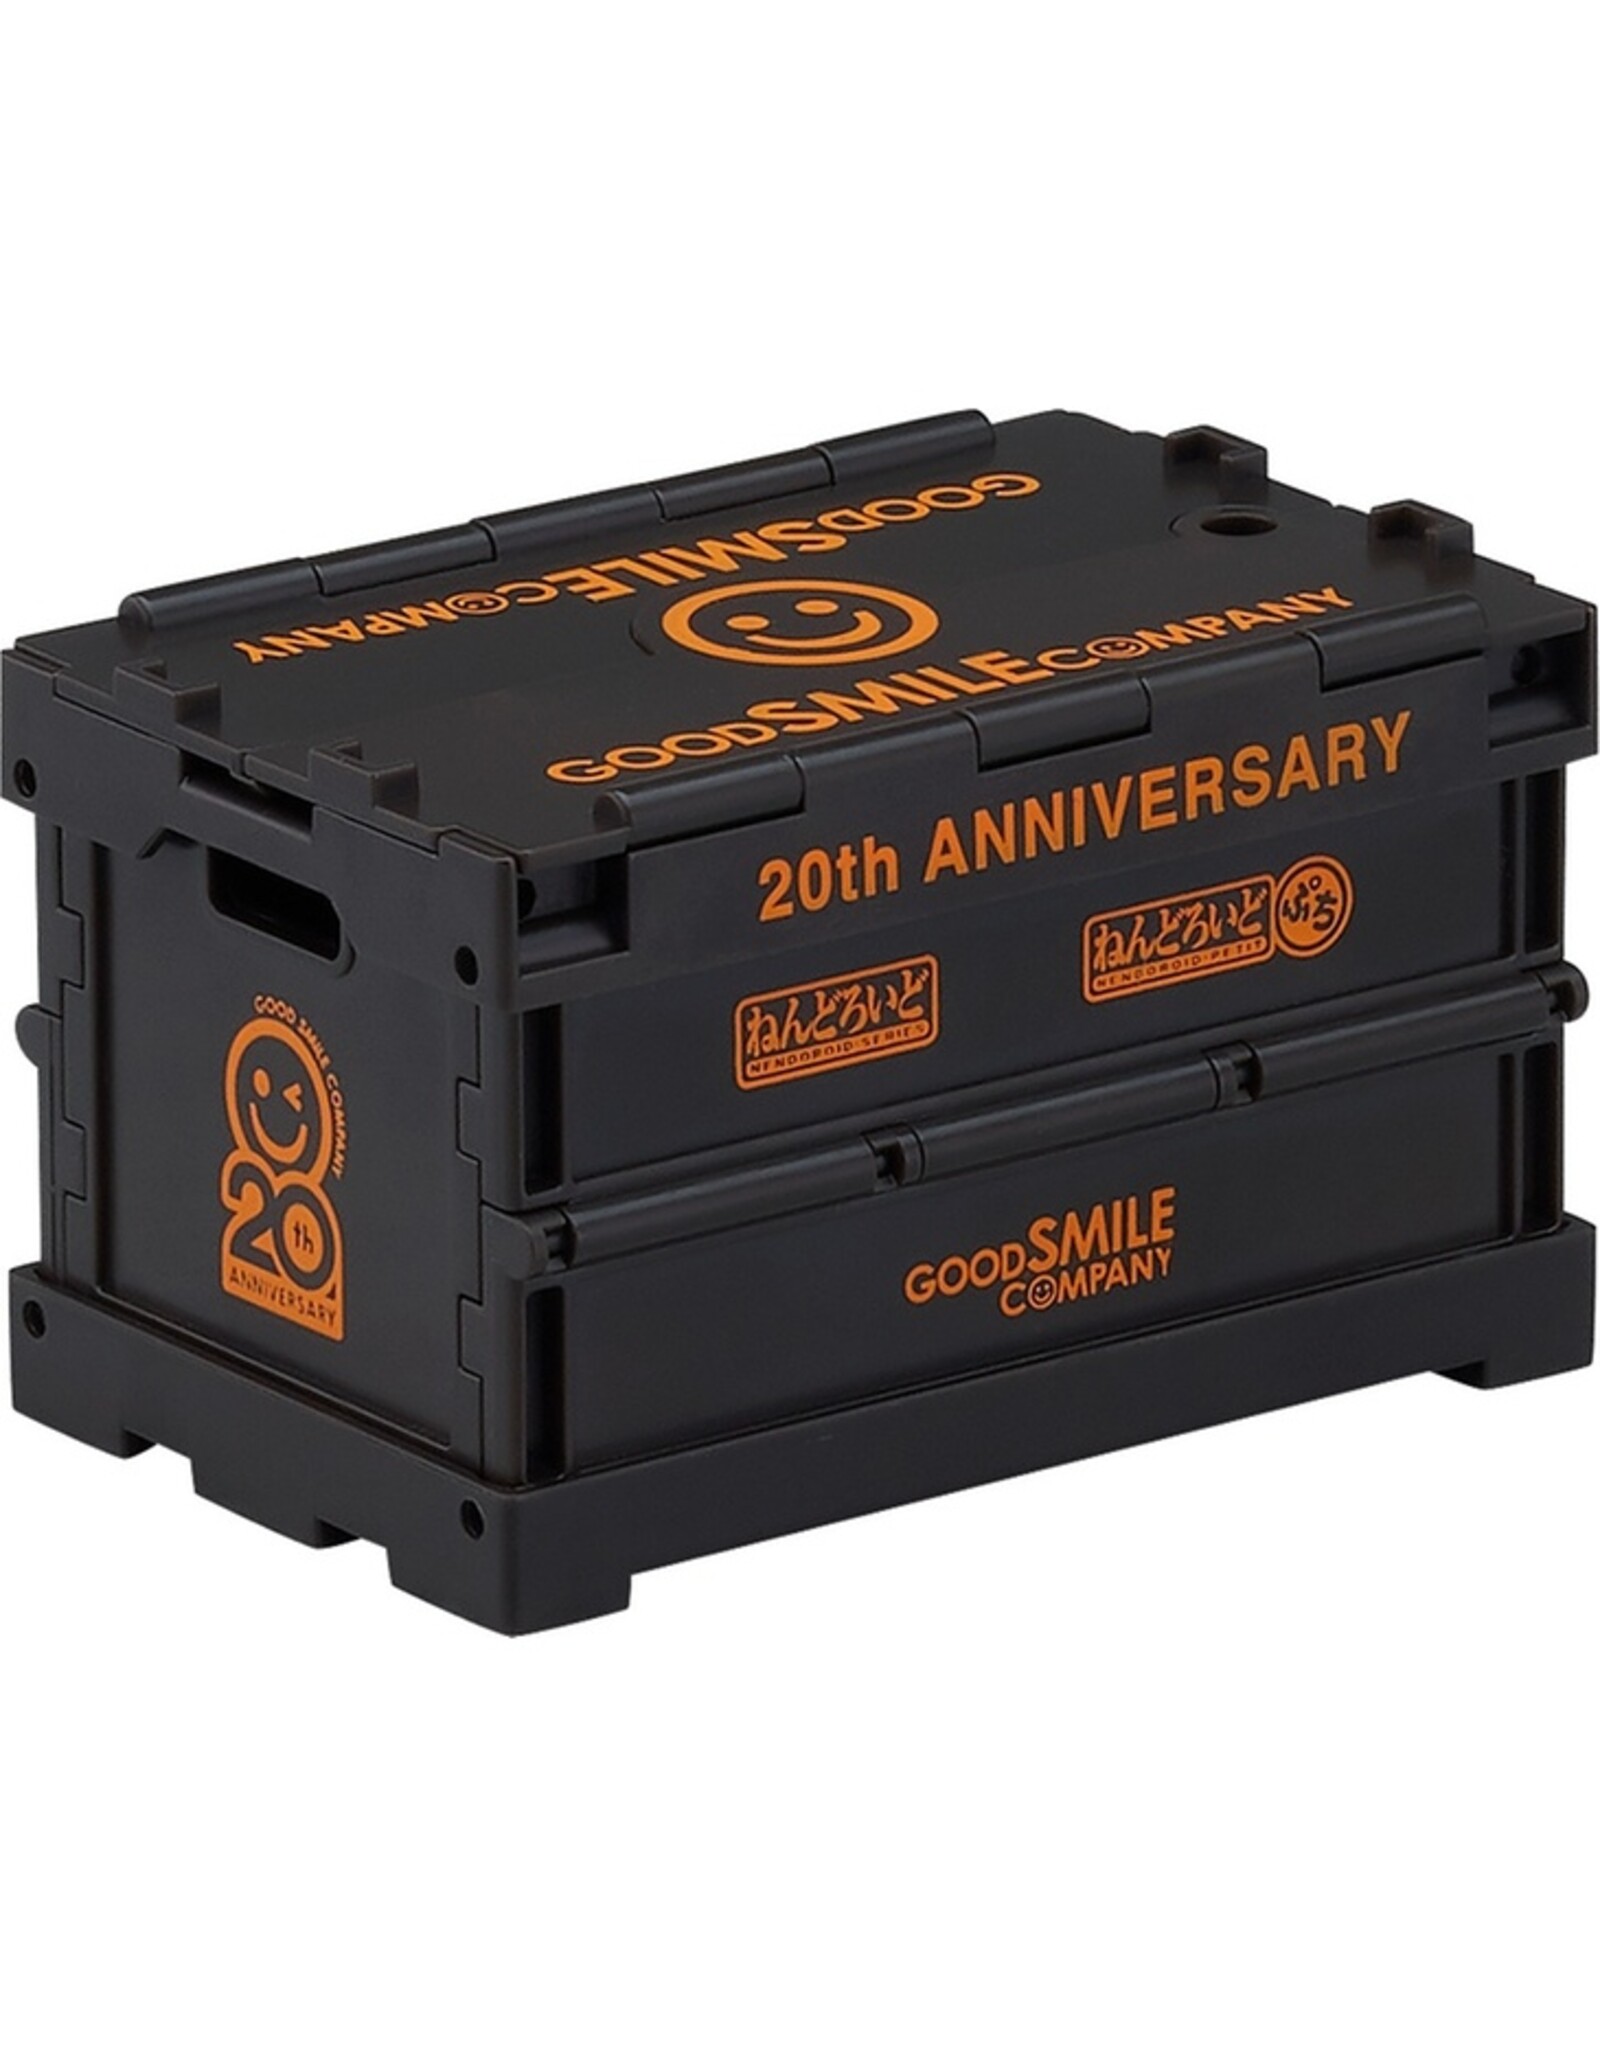 Goodsmile Nendoroid More Anniversary Container- Black